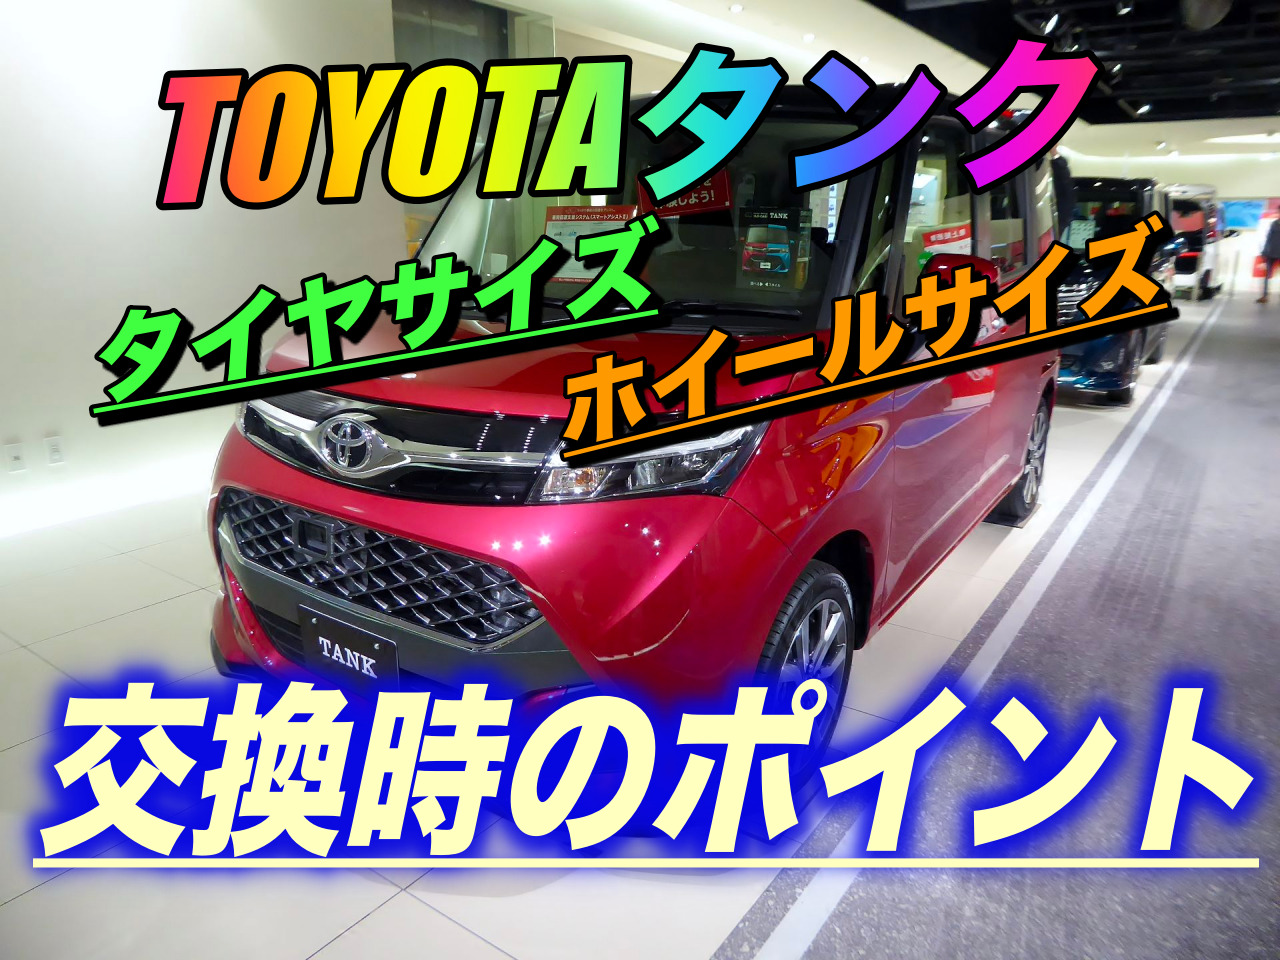 Toyotaタンク タイヤサイズ ホイールサイズ交換時のポイントは